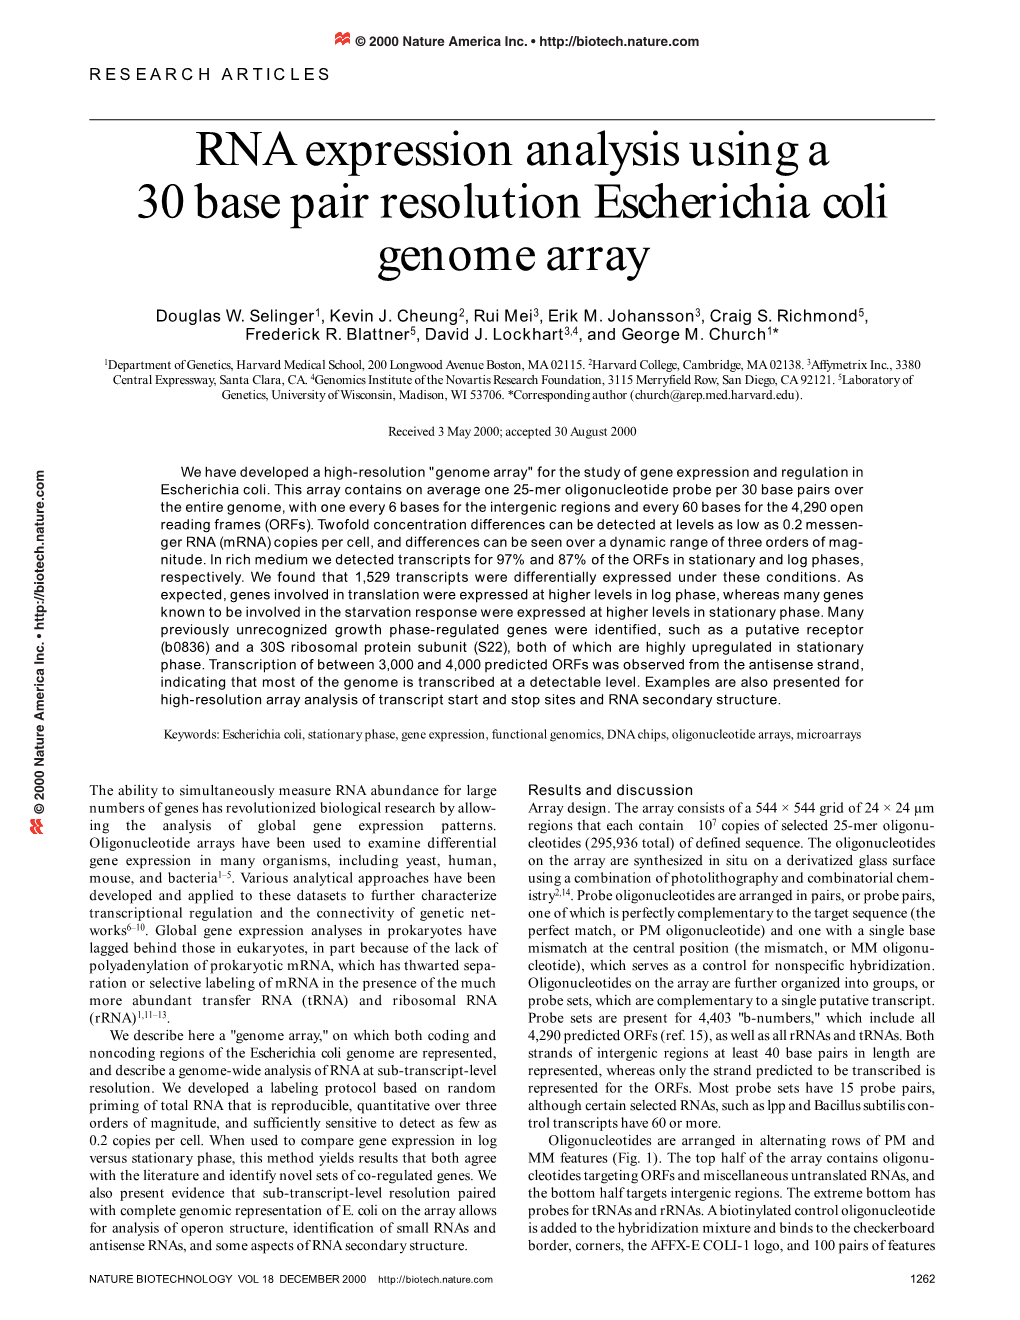 RNA Expression Analysis Using a 30 Base Pair Resolution Escherichia Coli Genome Array